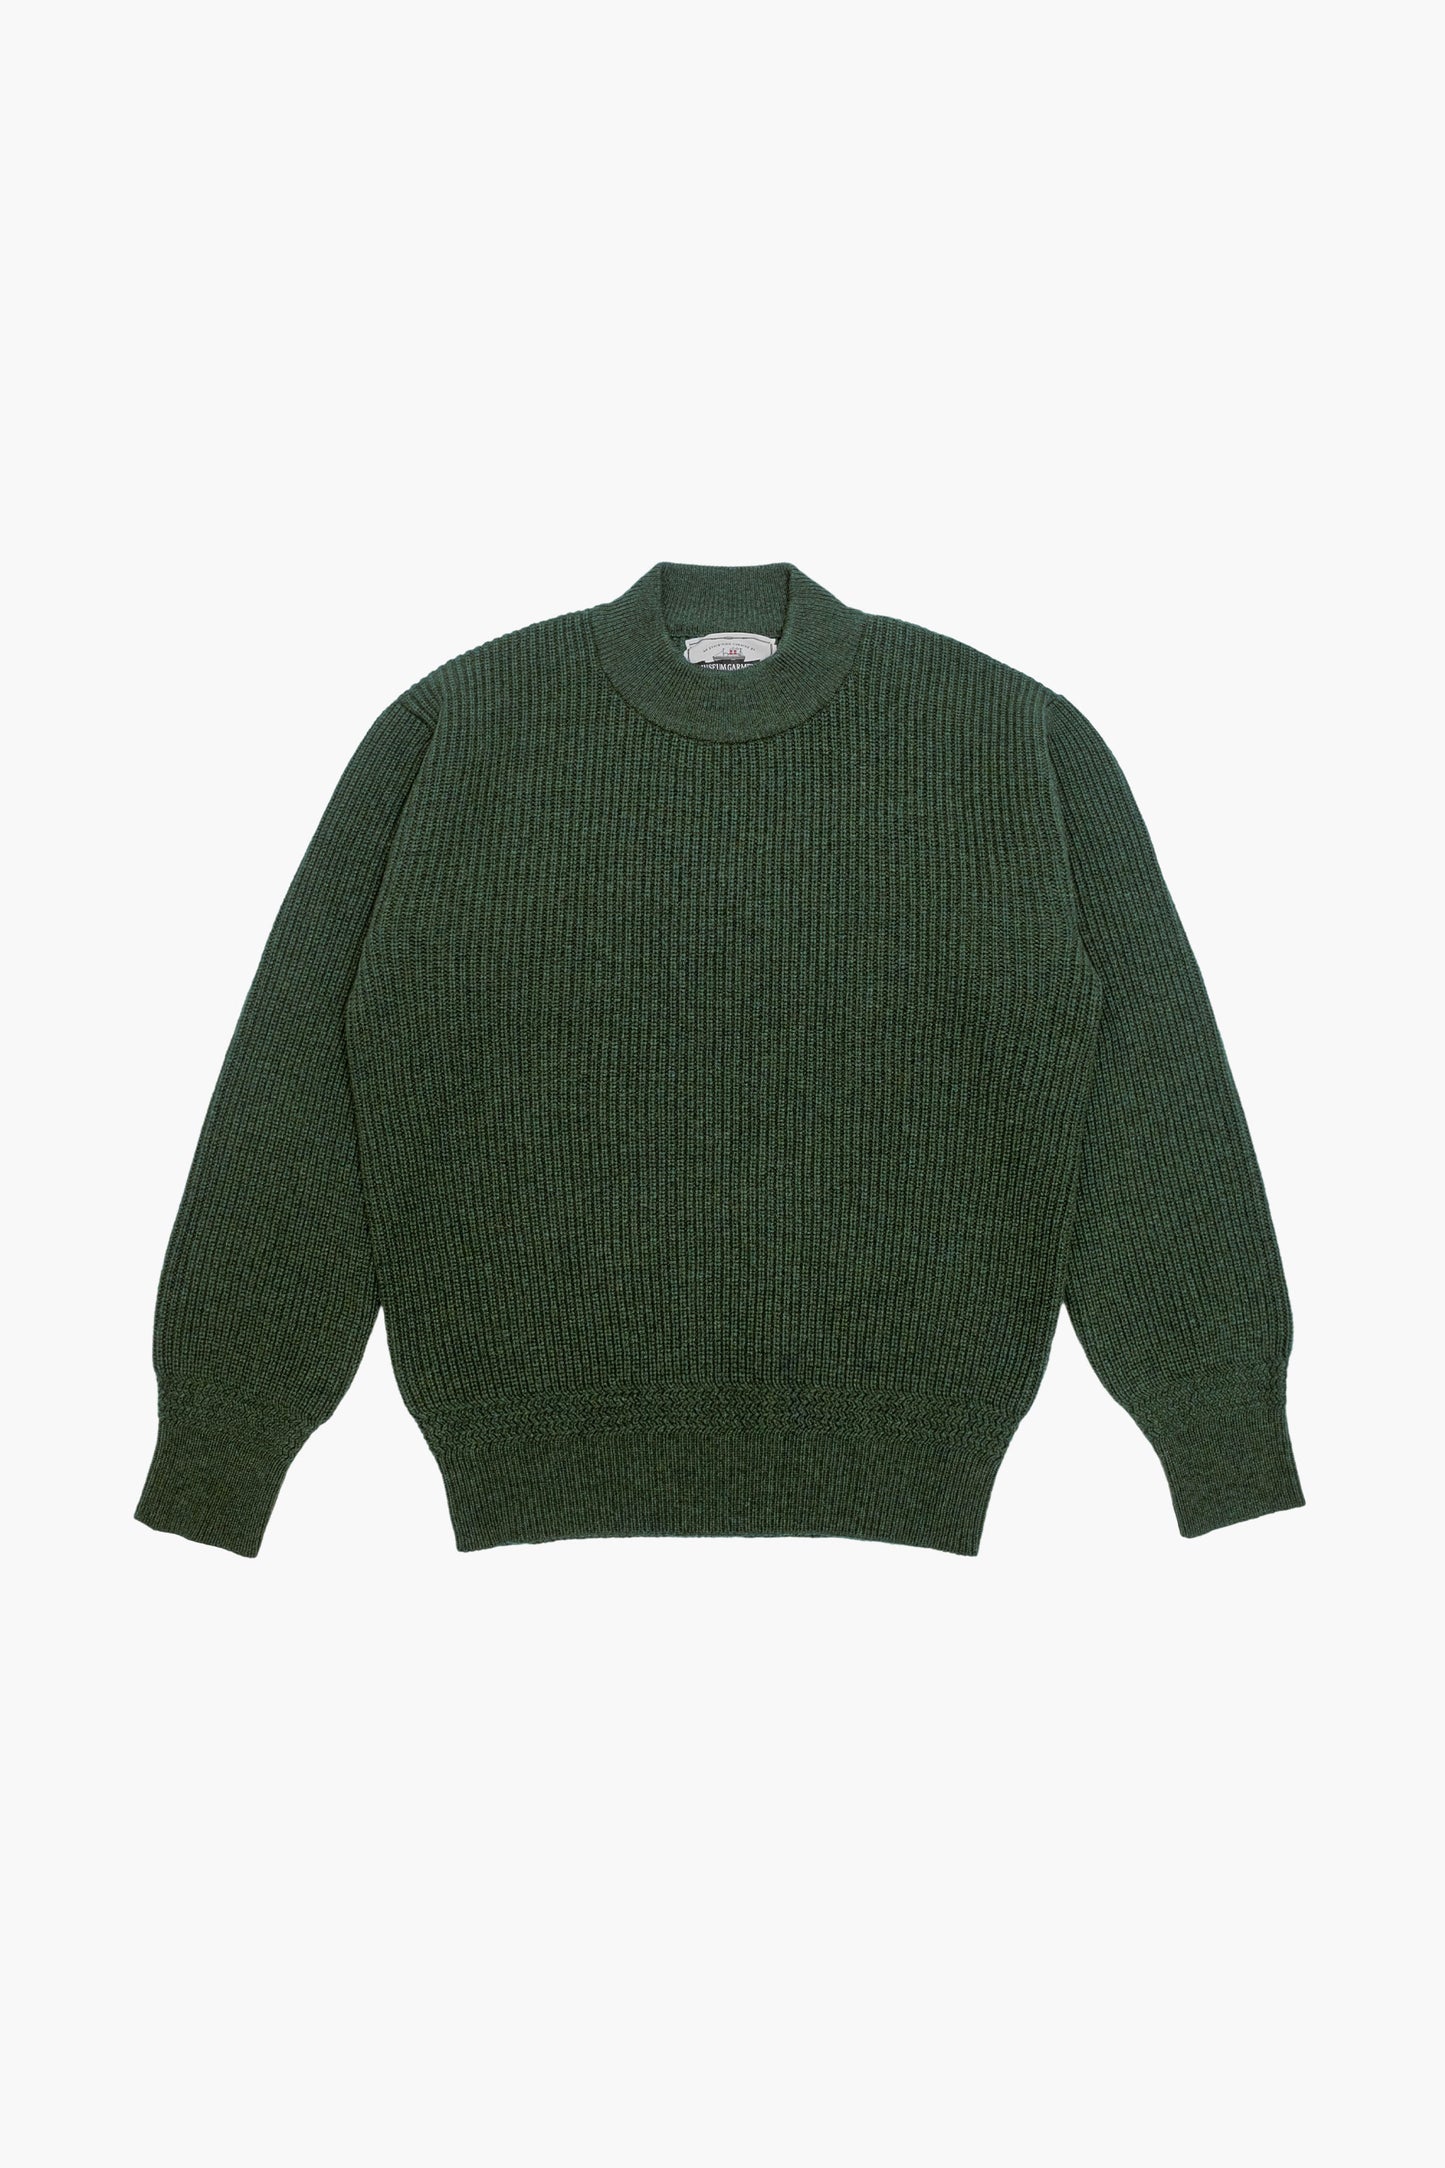 Deck sweater in green lambswool 